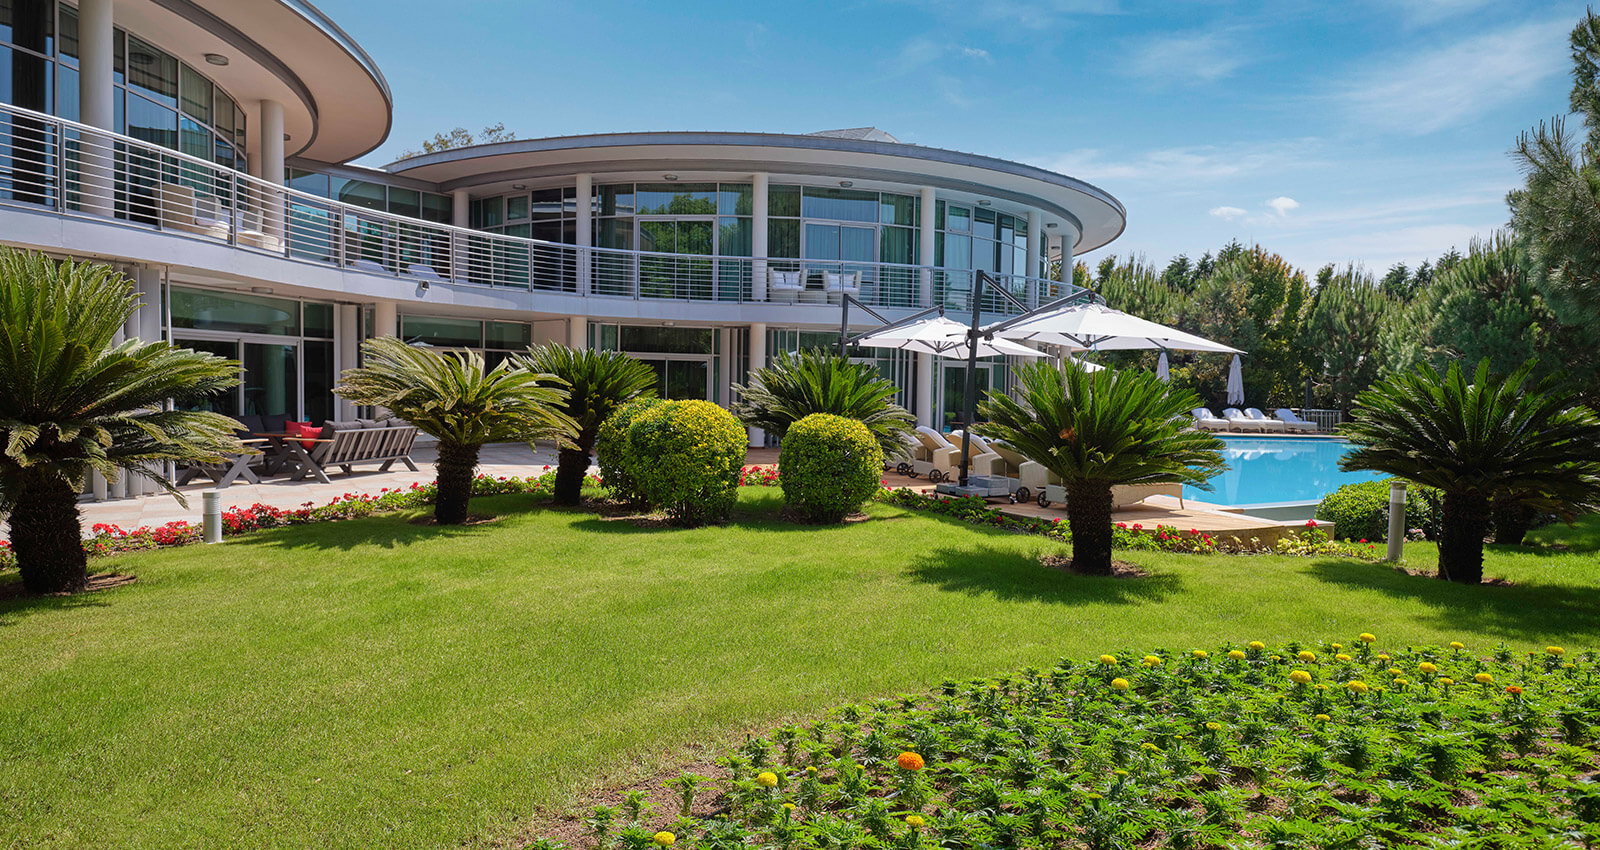 Calista Resort Villa Leo Antalya Belek Large Image 1